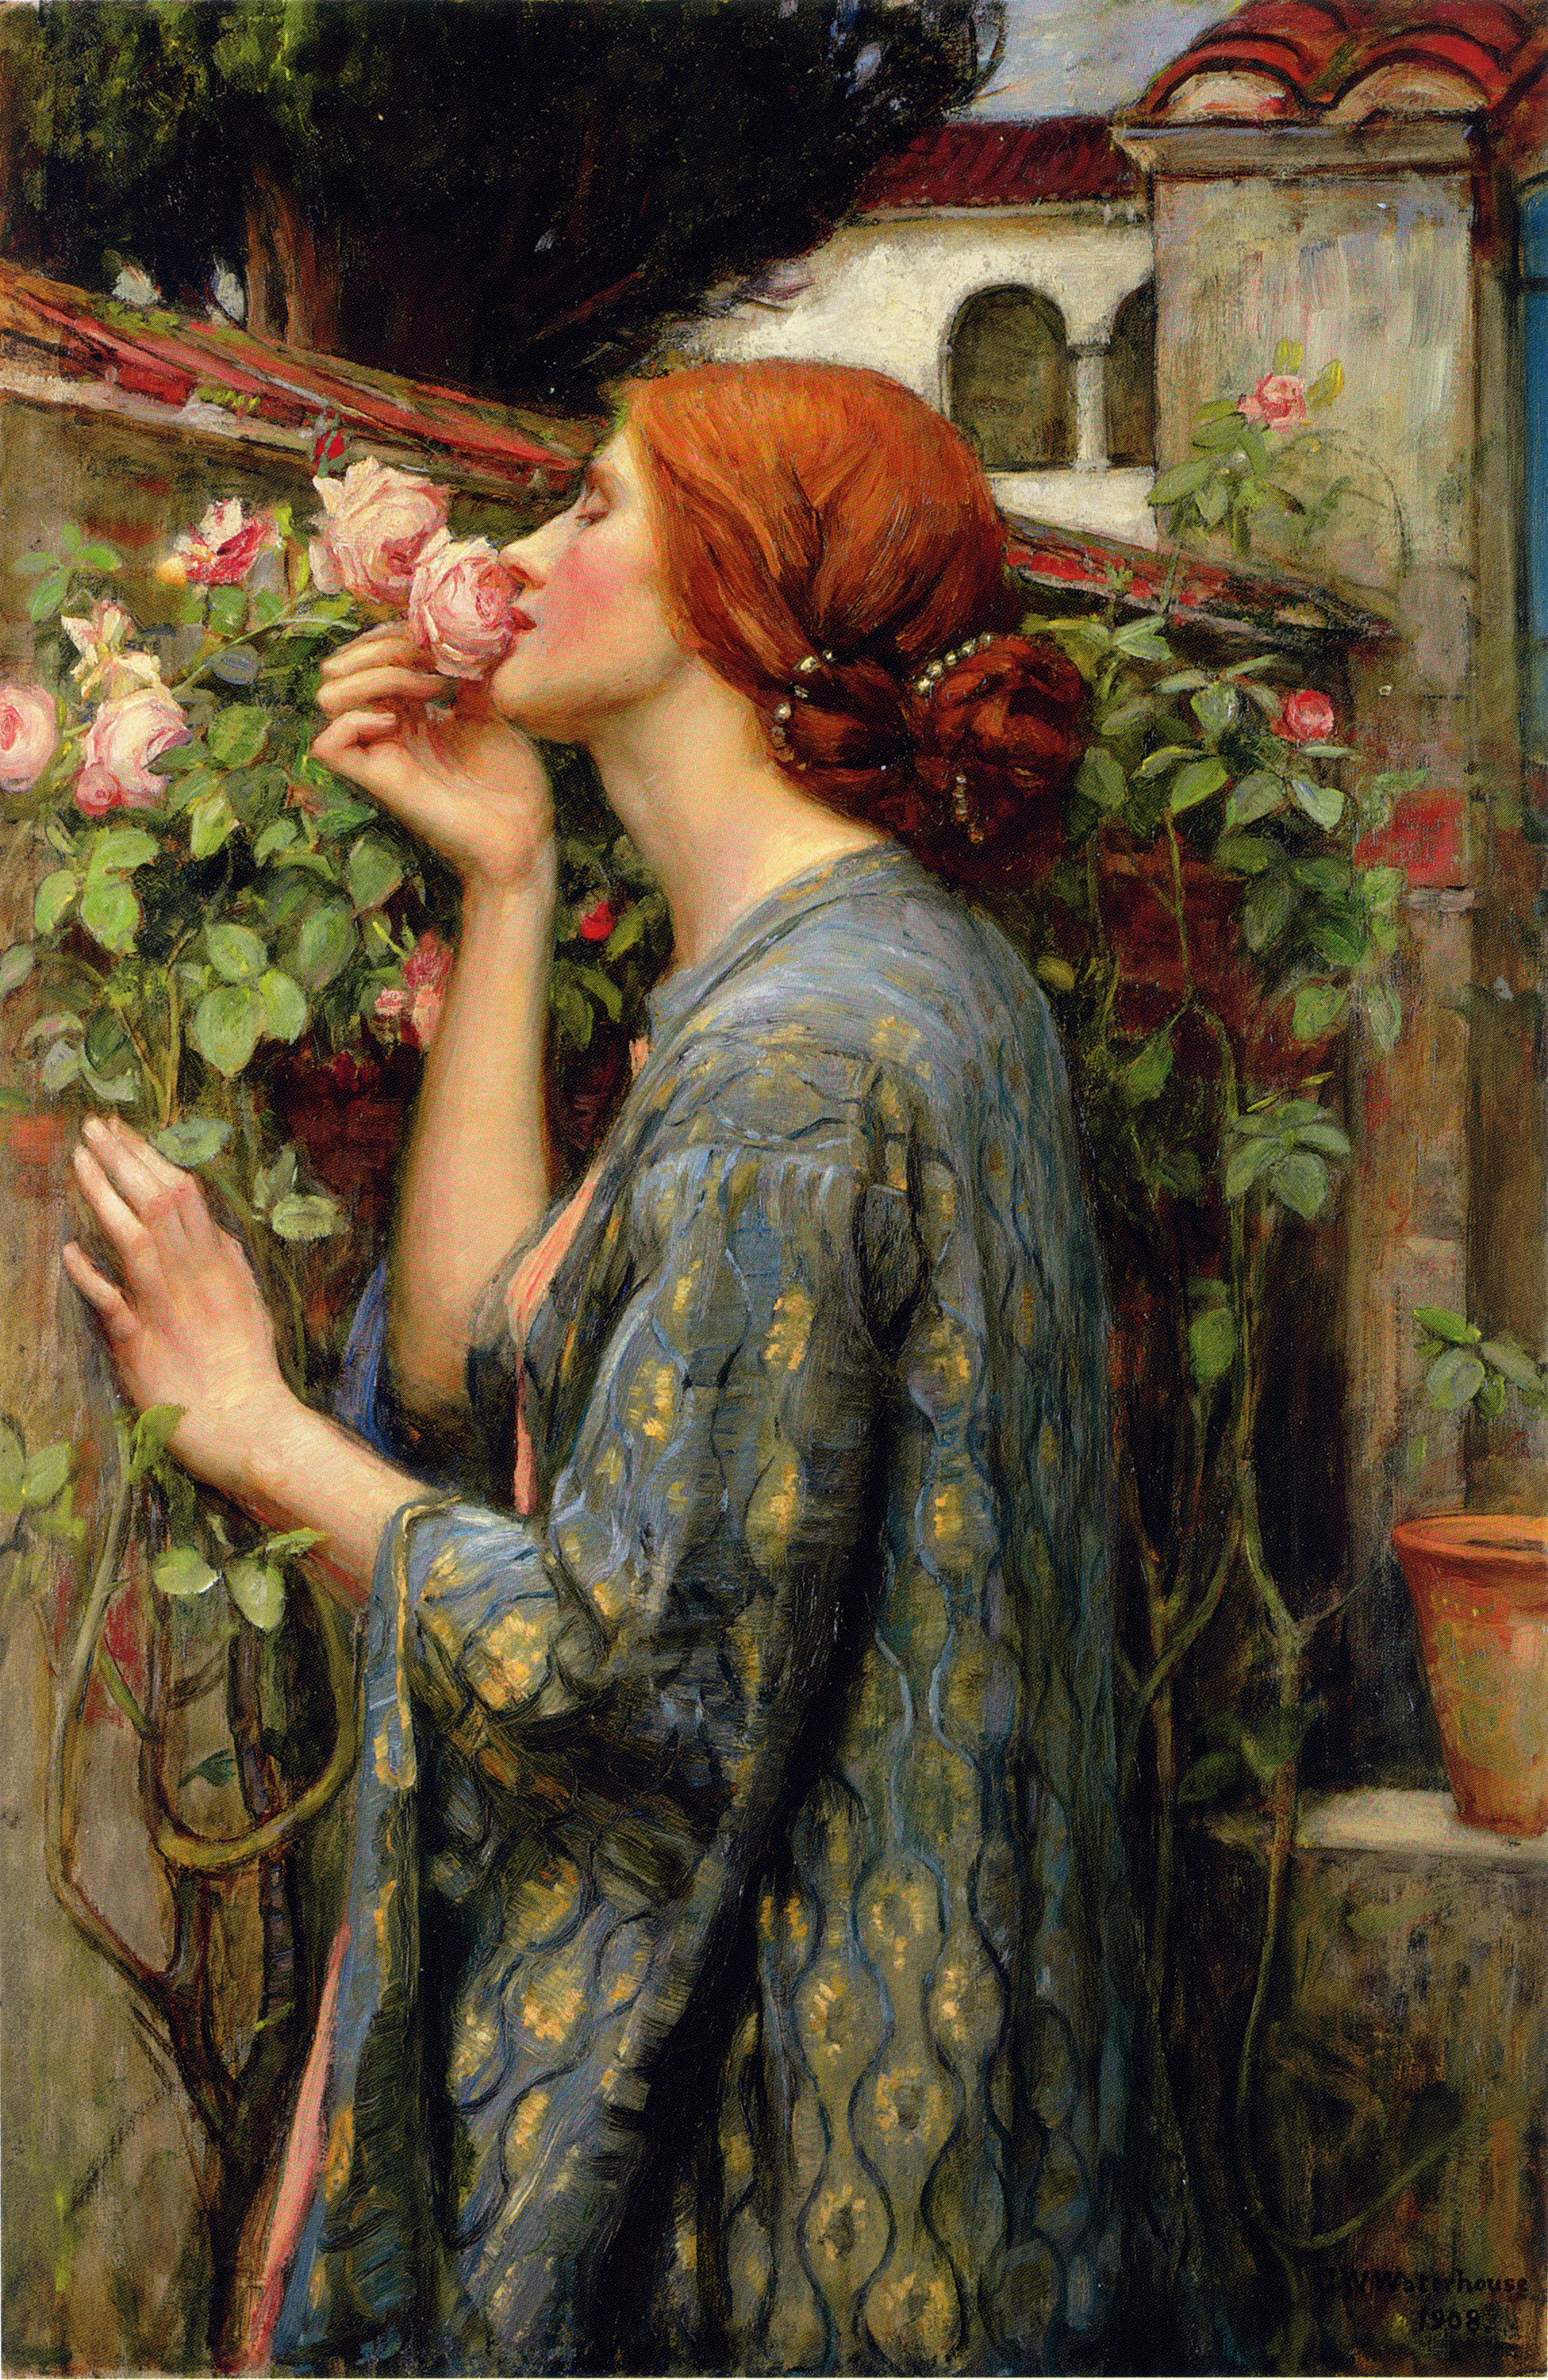 A rózsa lelke by John William Waterhouse - 1903 - 88.3 x 59.1 cm 